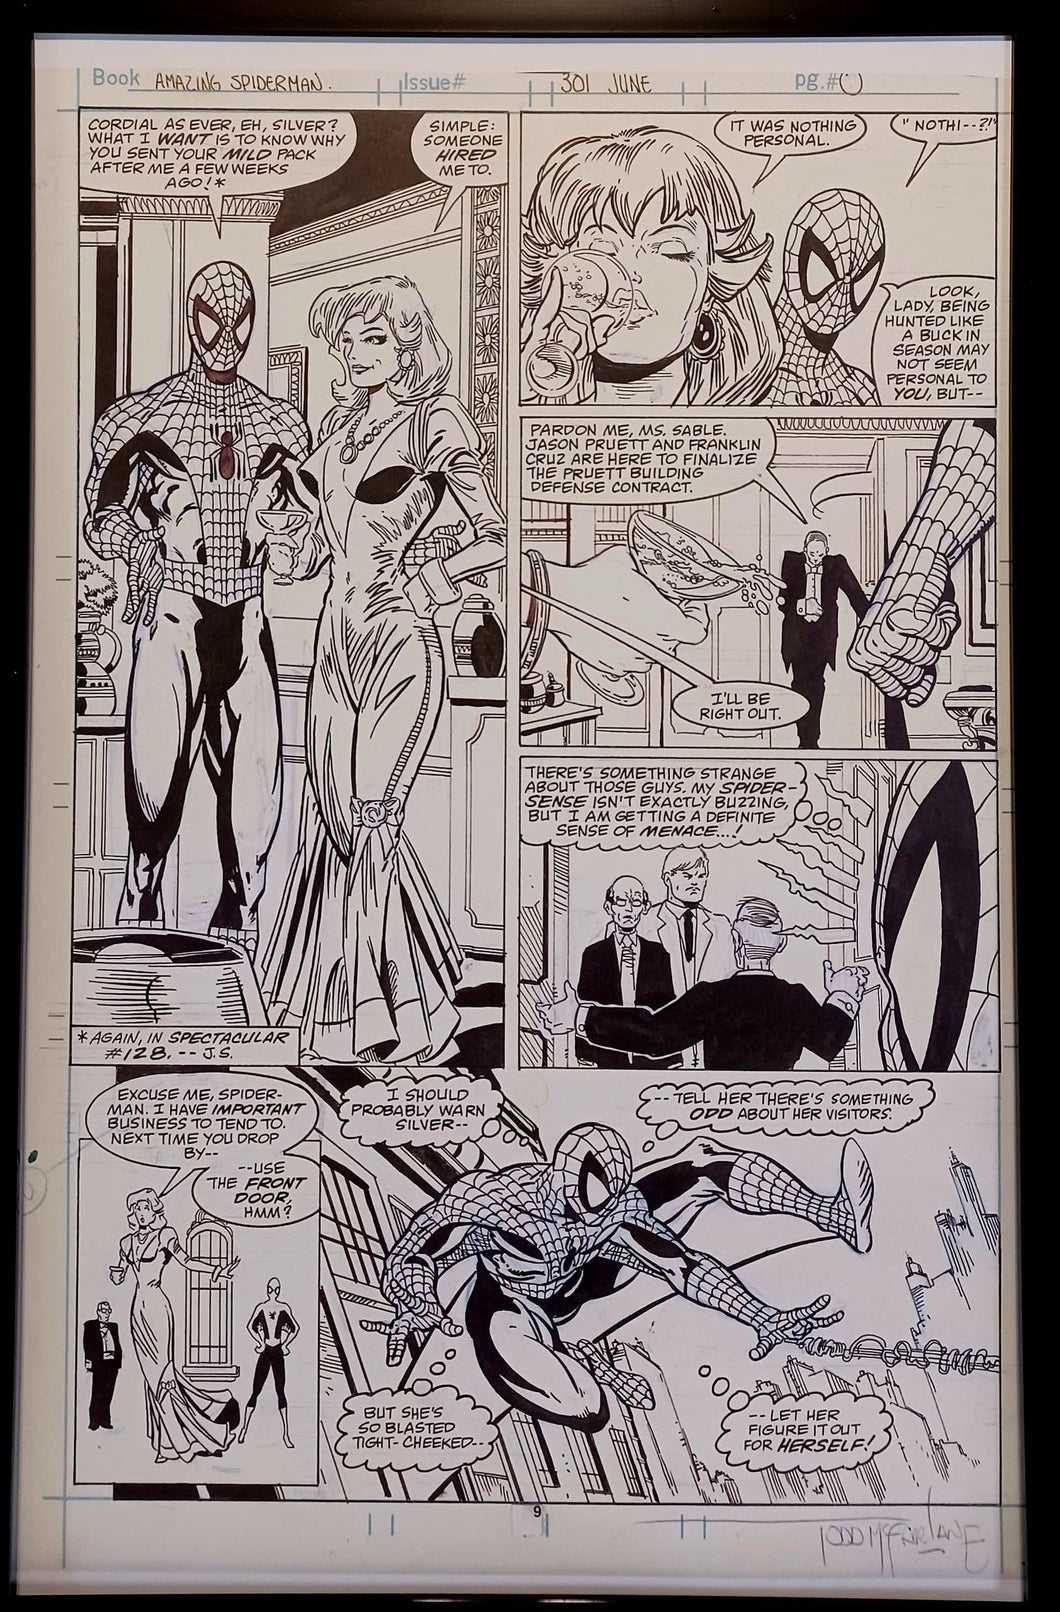 Amazing Spider-Man #301 pg. 7 by Todd McFarlane 11x17 FRAMED Original Art Print Comic Poster